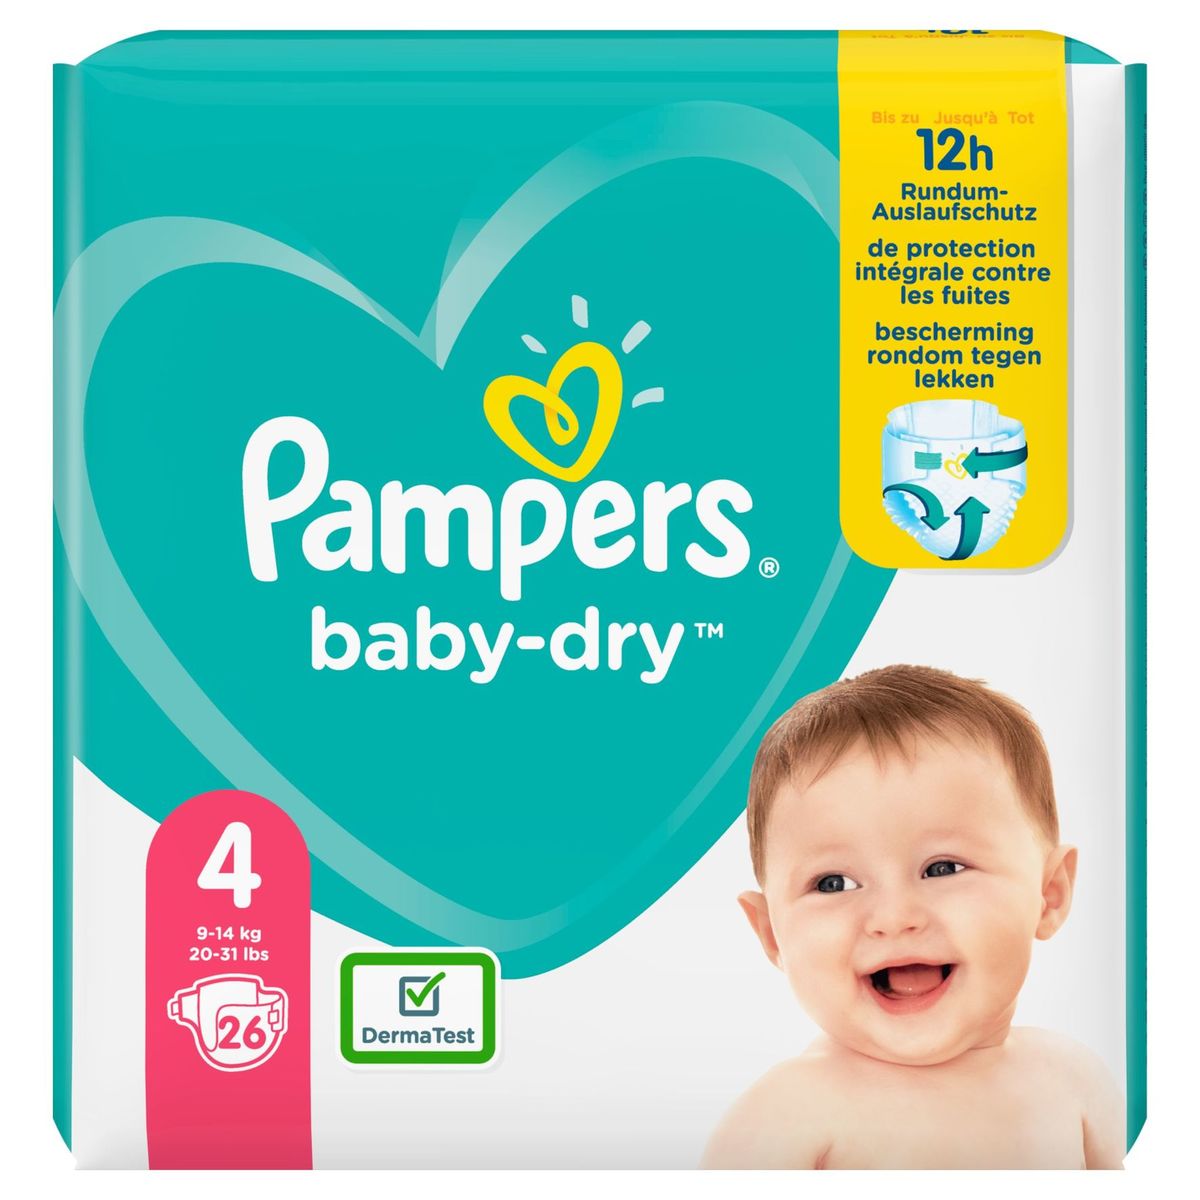 Pampers Baby-Dry Taille 4, 26 Langes, Jusqu'À 12 h De Protection, 9-14kg